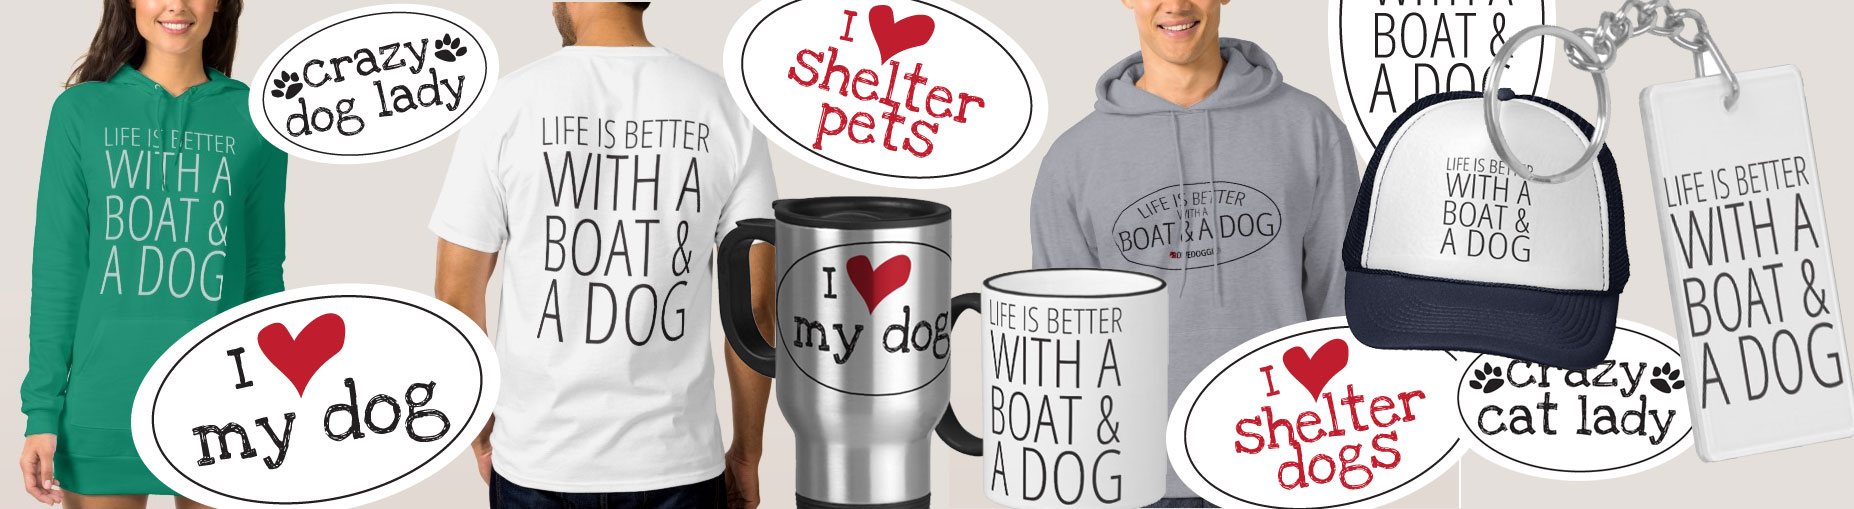 Dog lover t-shirts, mugs, hats, keychains, hoodie